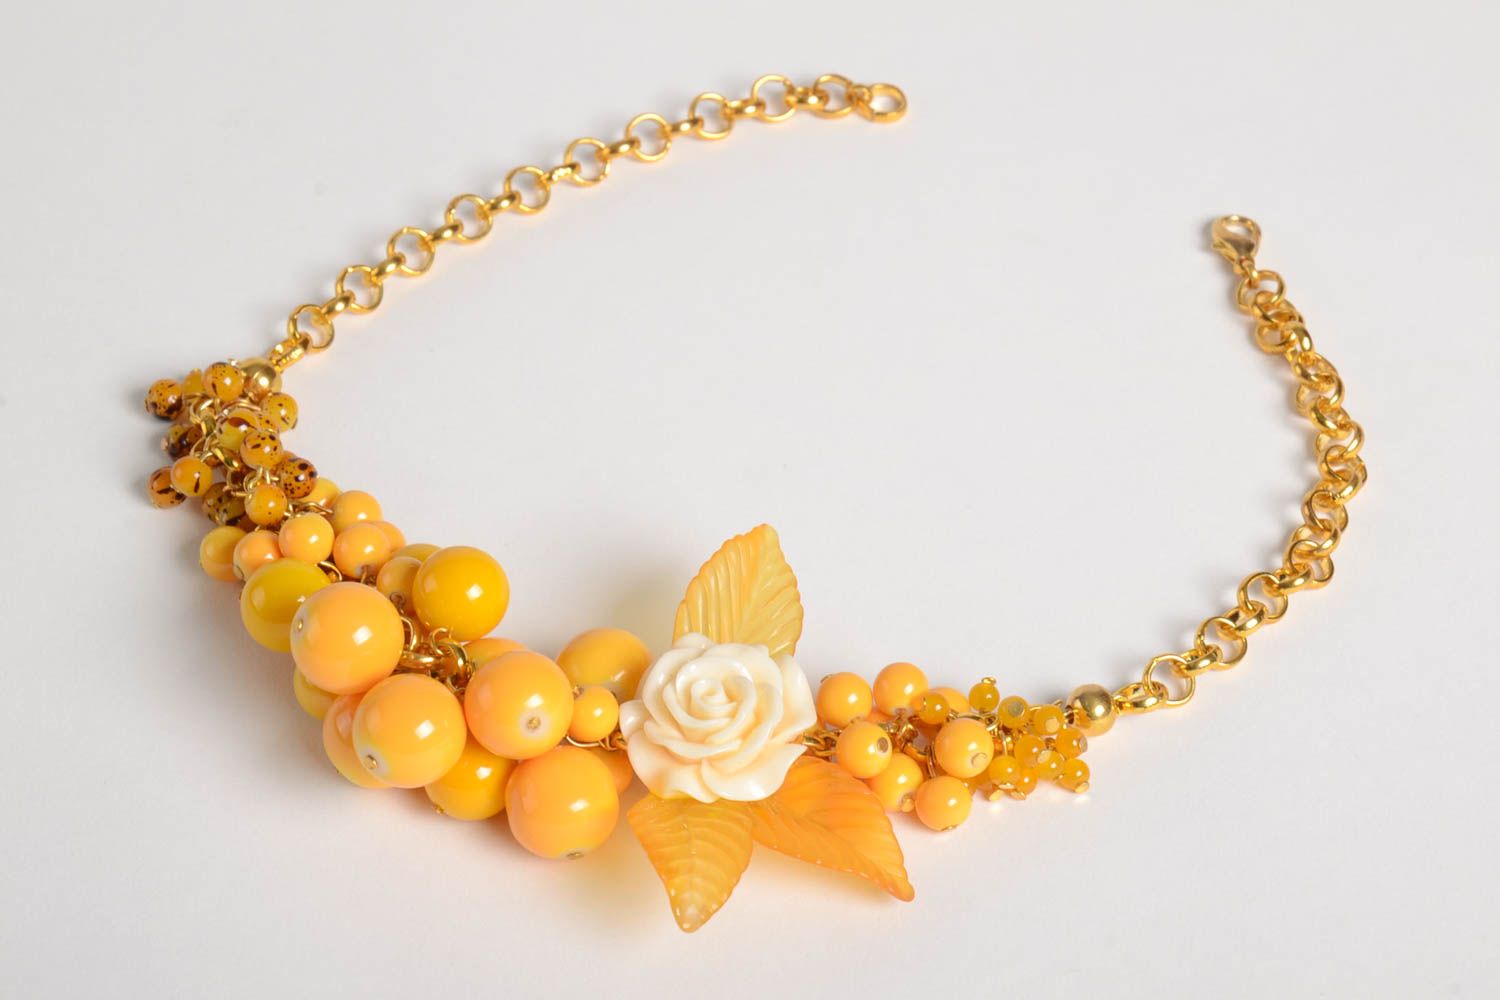 Yellow handmade beaded necklace fashion accessories artisan jewelry designs photo 5